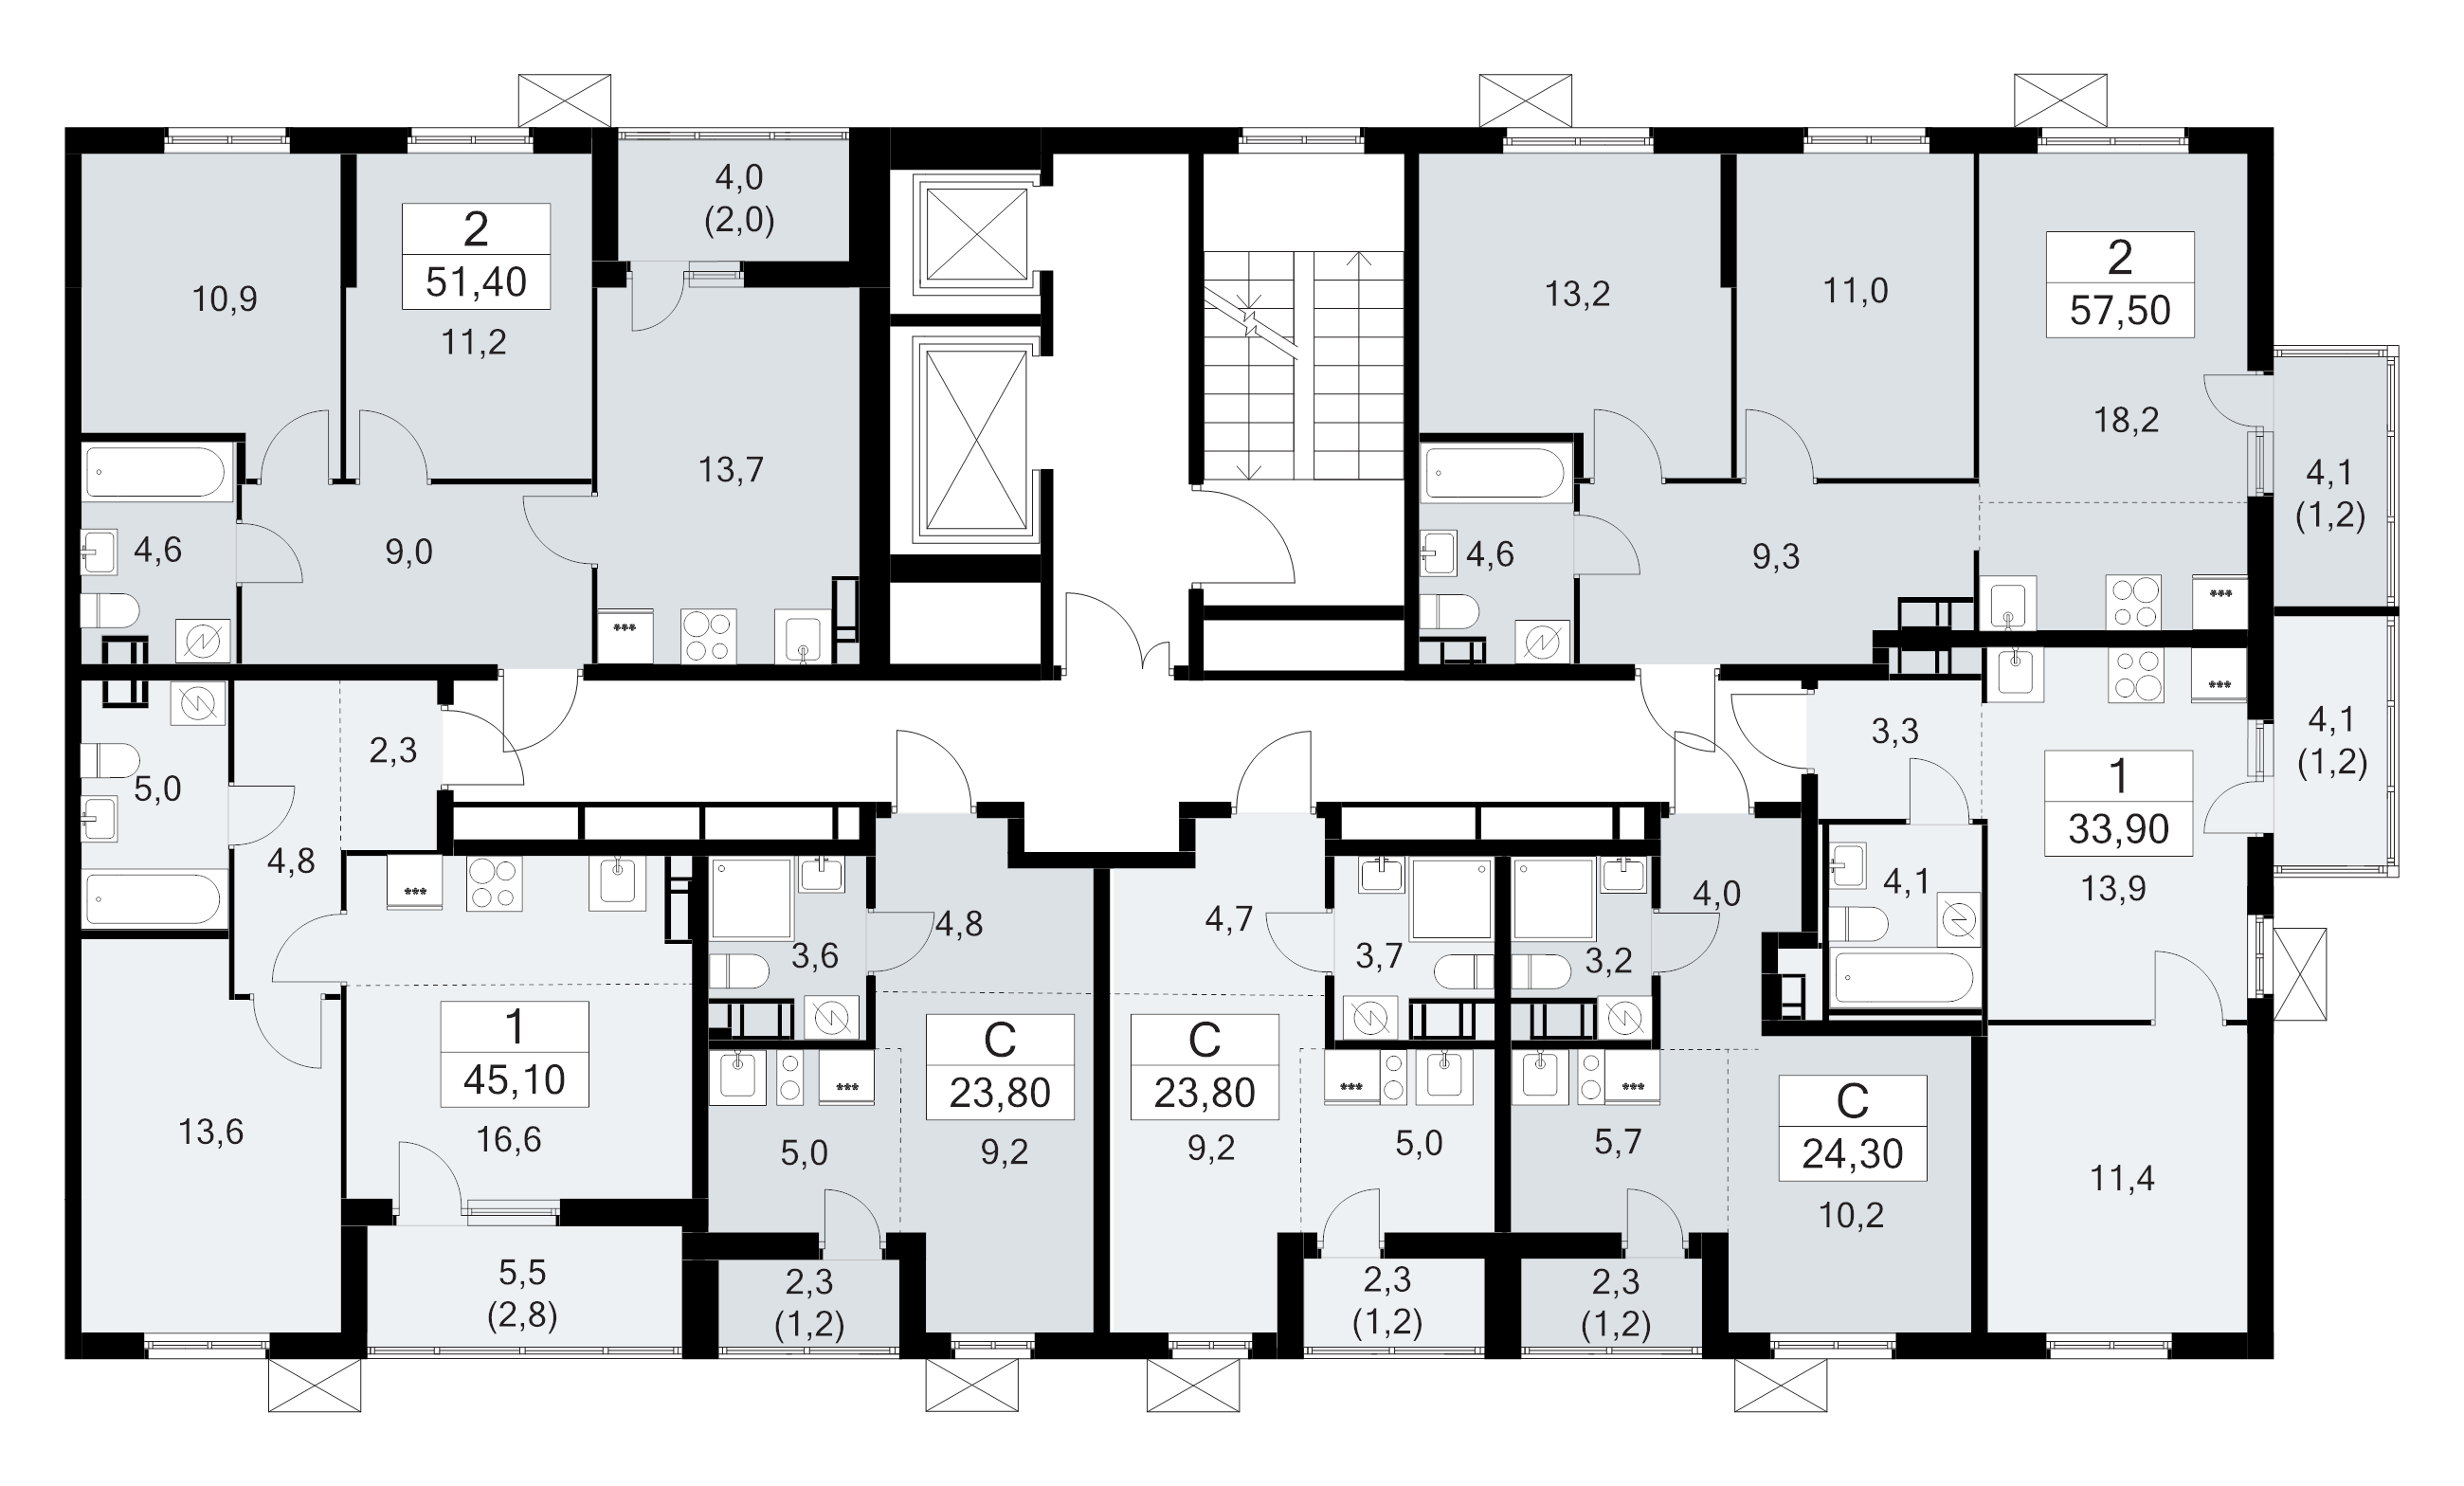 3-комнатная (Евро) квартира, 57.5 м² - планировка этажа